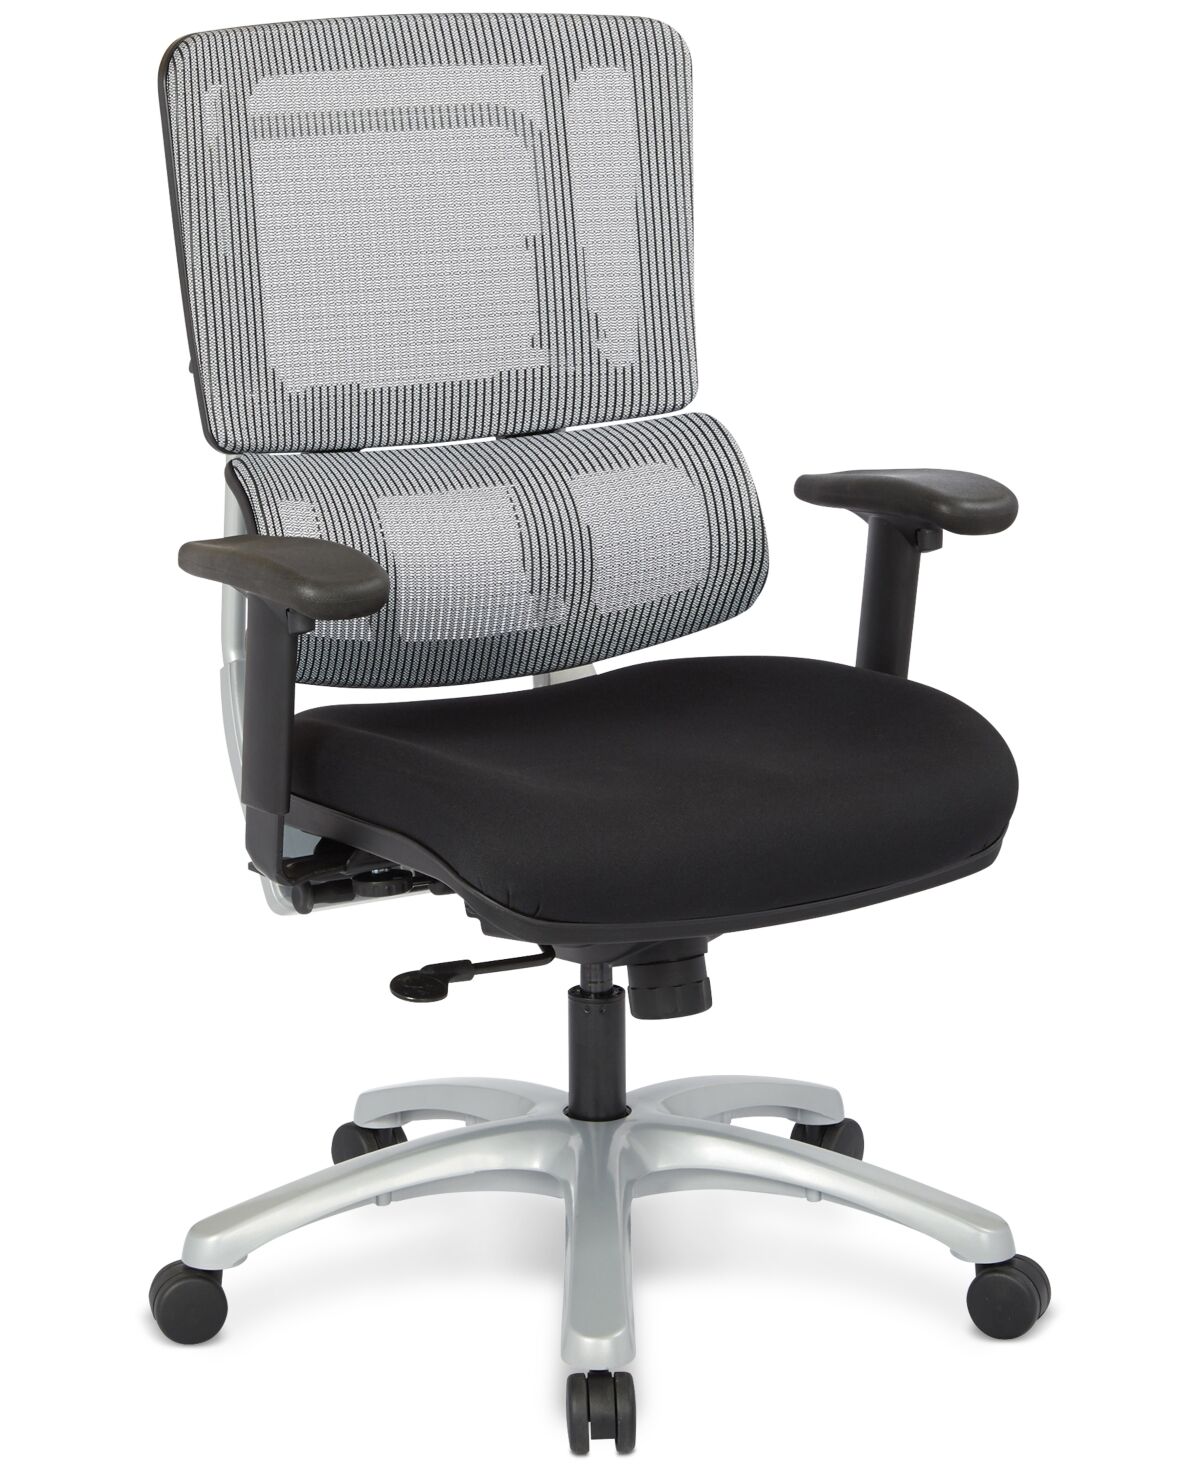 Office Star Adkin Mesh Office Chair - Grey